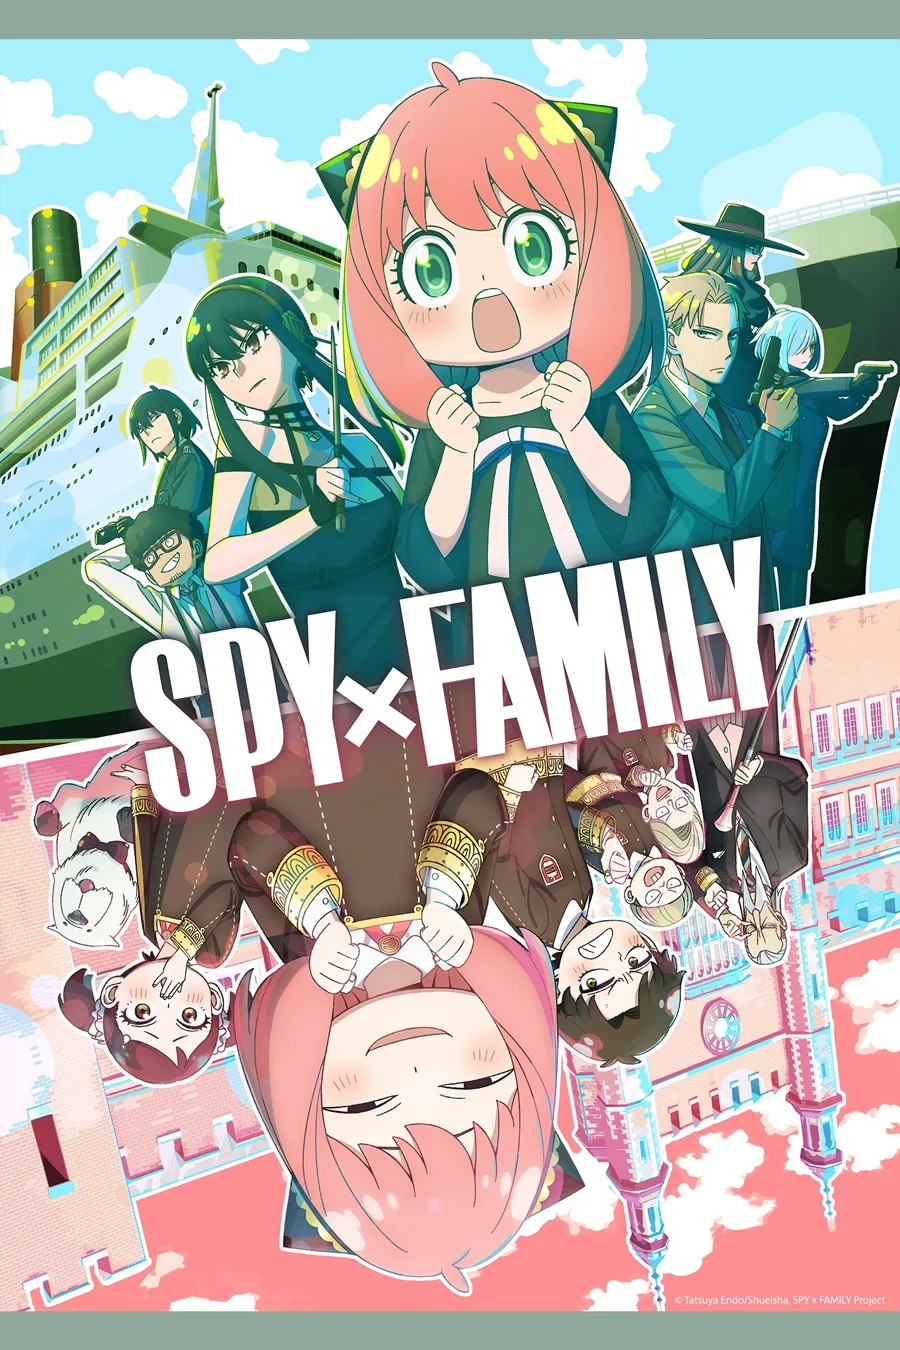 SAIU: Episódio 7 (32) Do Anime Spy x Family II (2ª Temporada